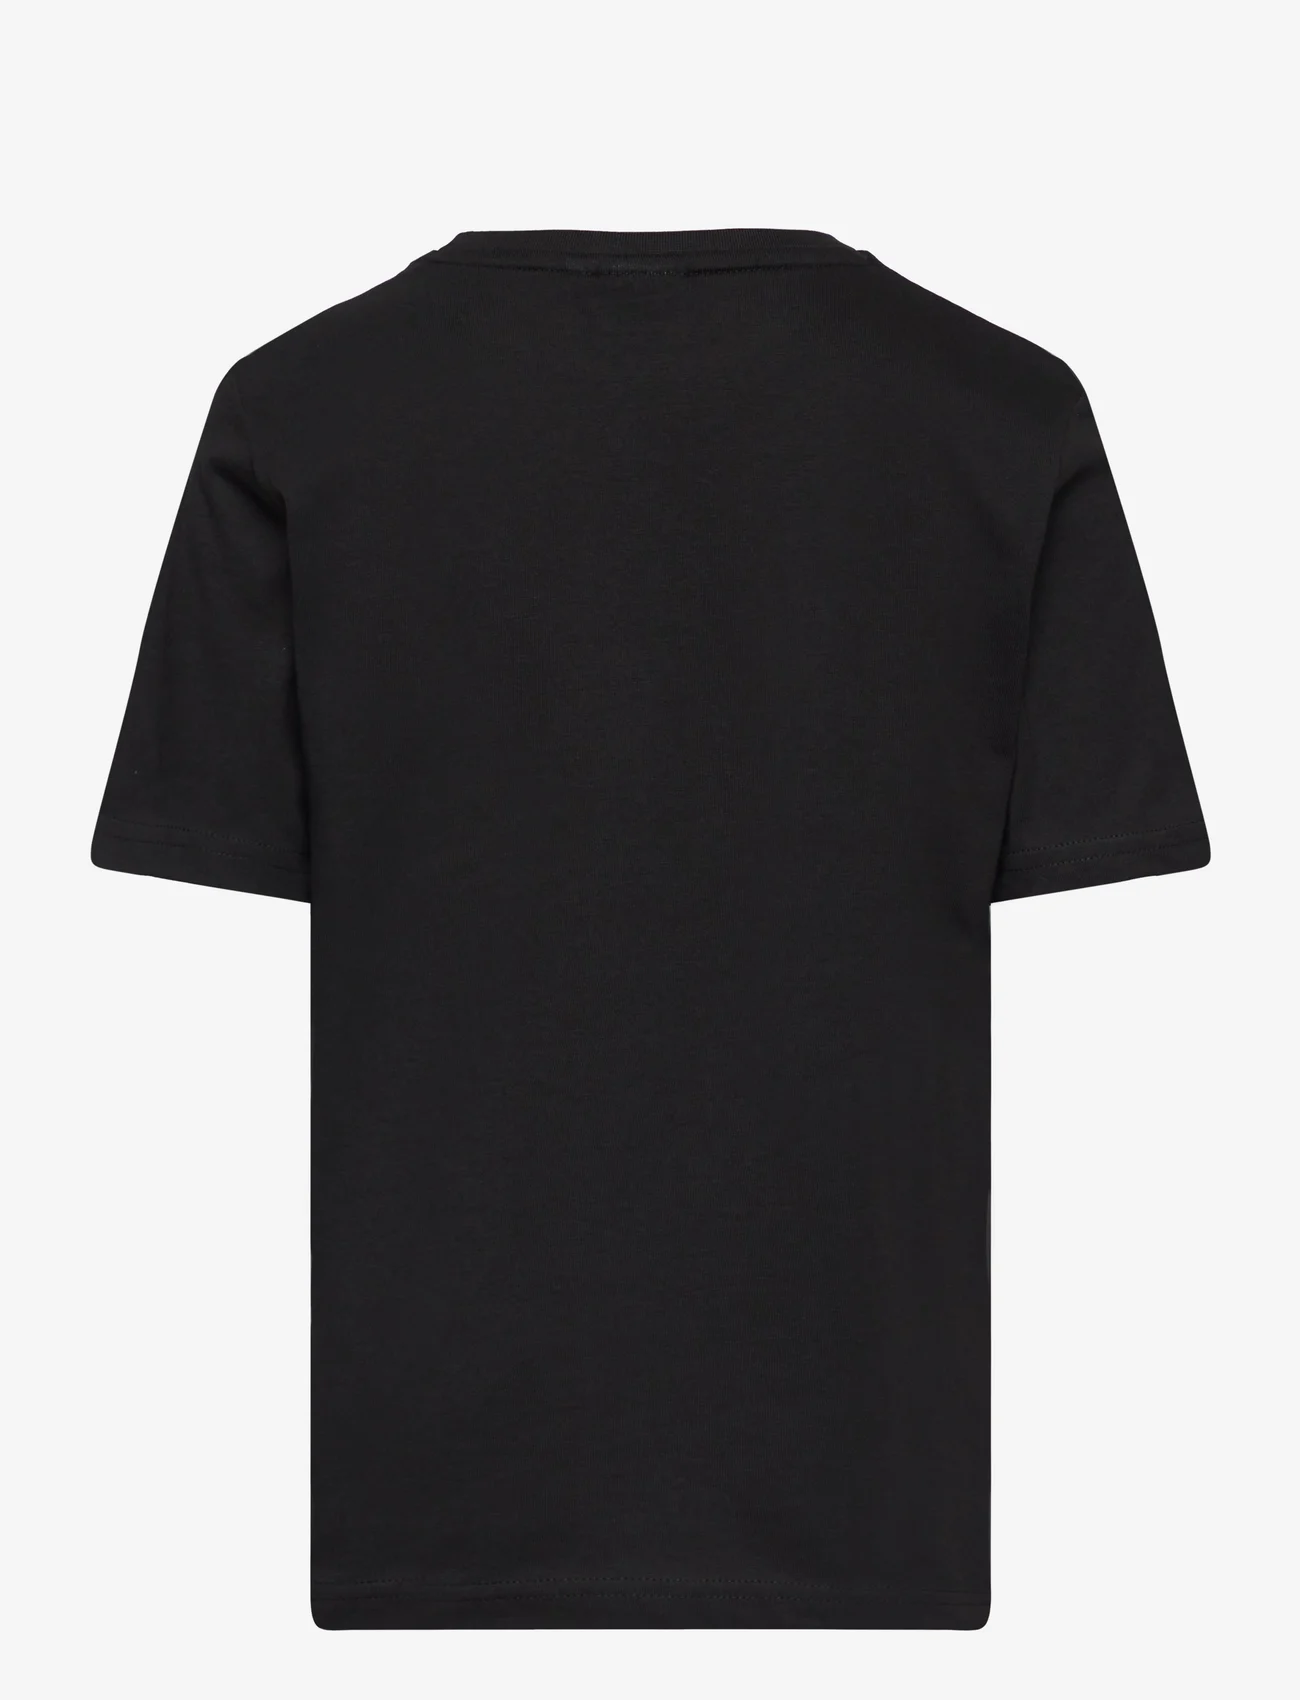 BOSS - SHORT SLEEVES TEE-SHIRT - kortärmade t-shirts - black - 1